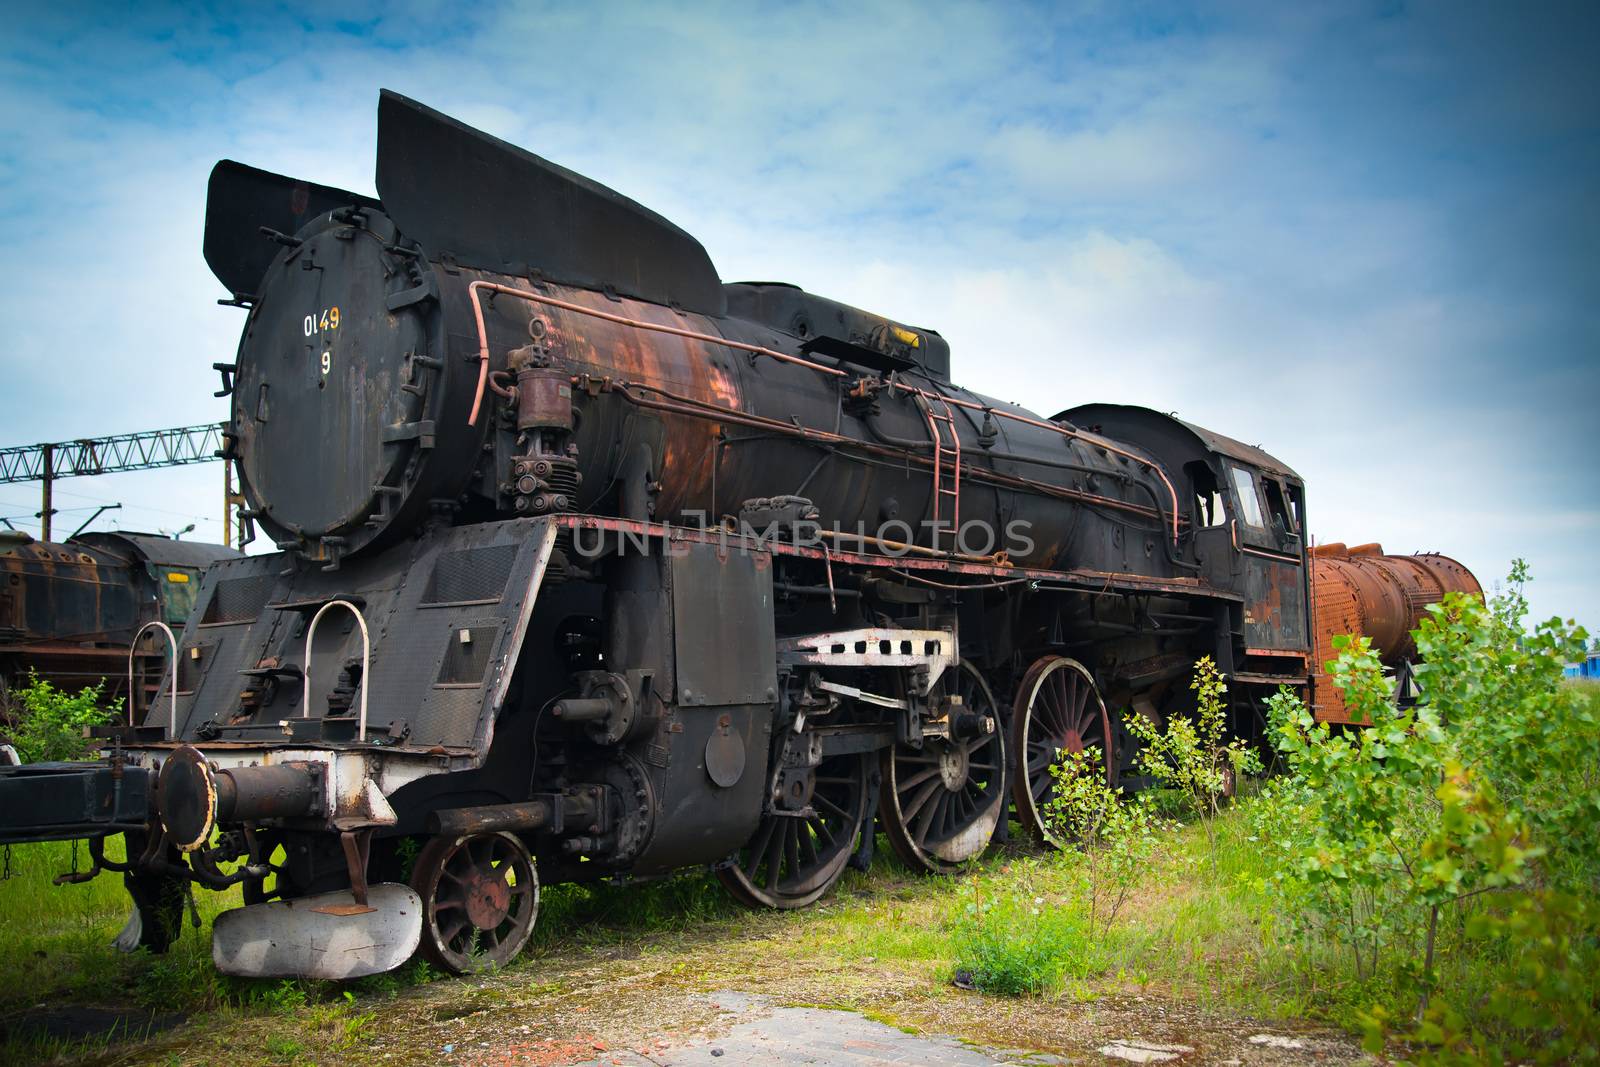 An old locomotive by furzyk73